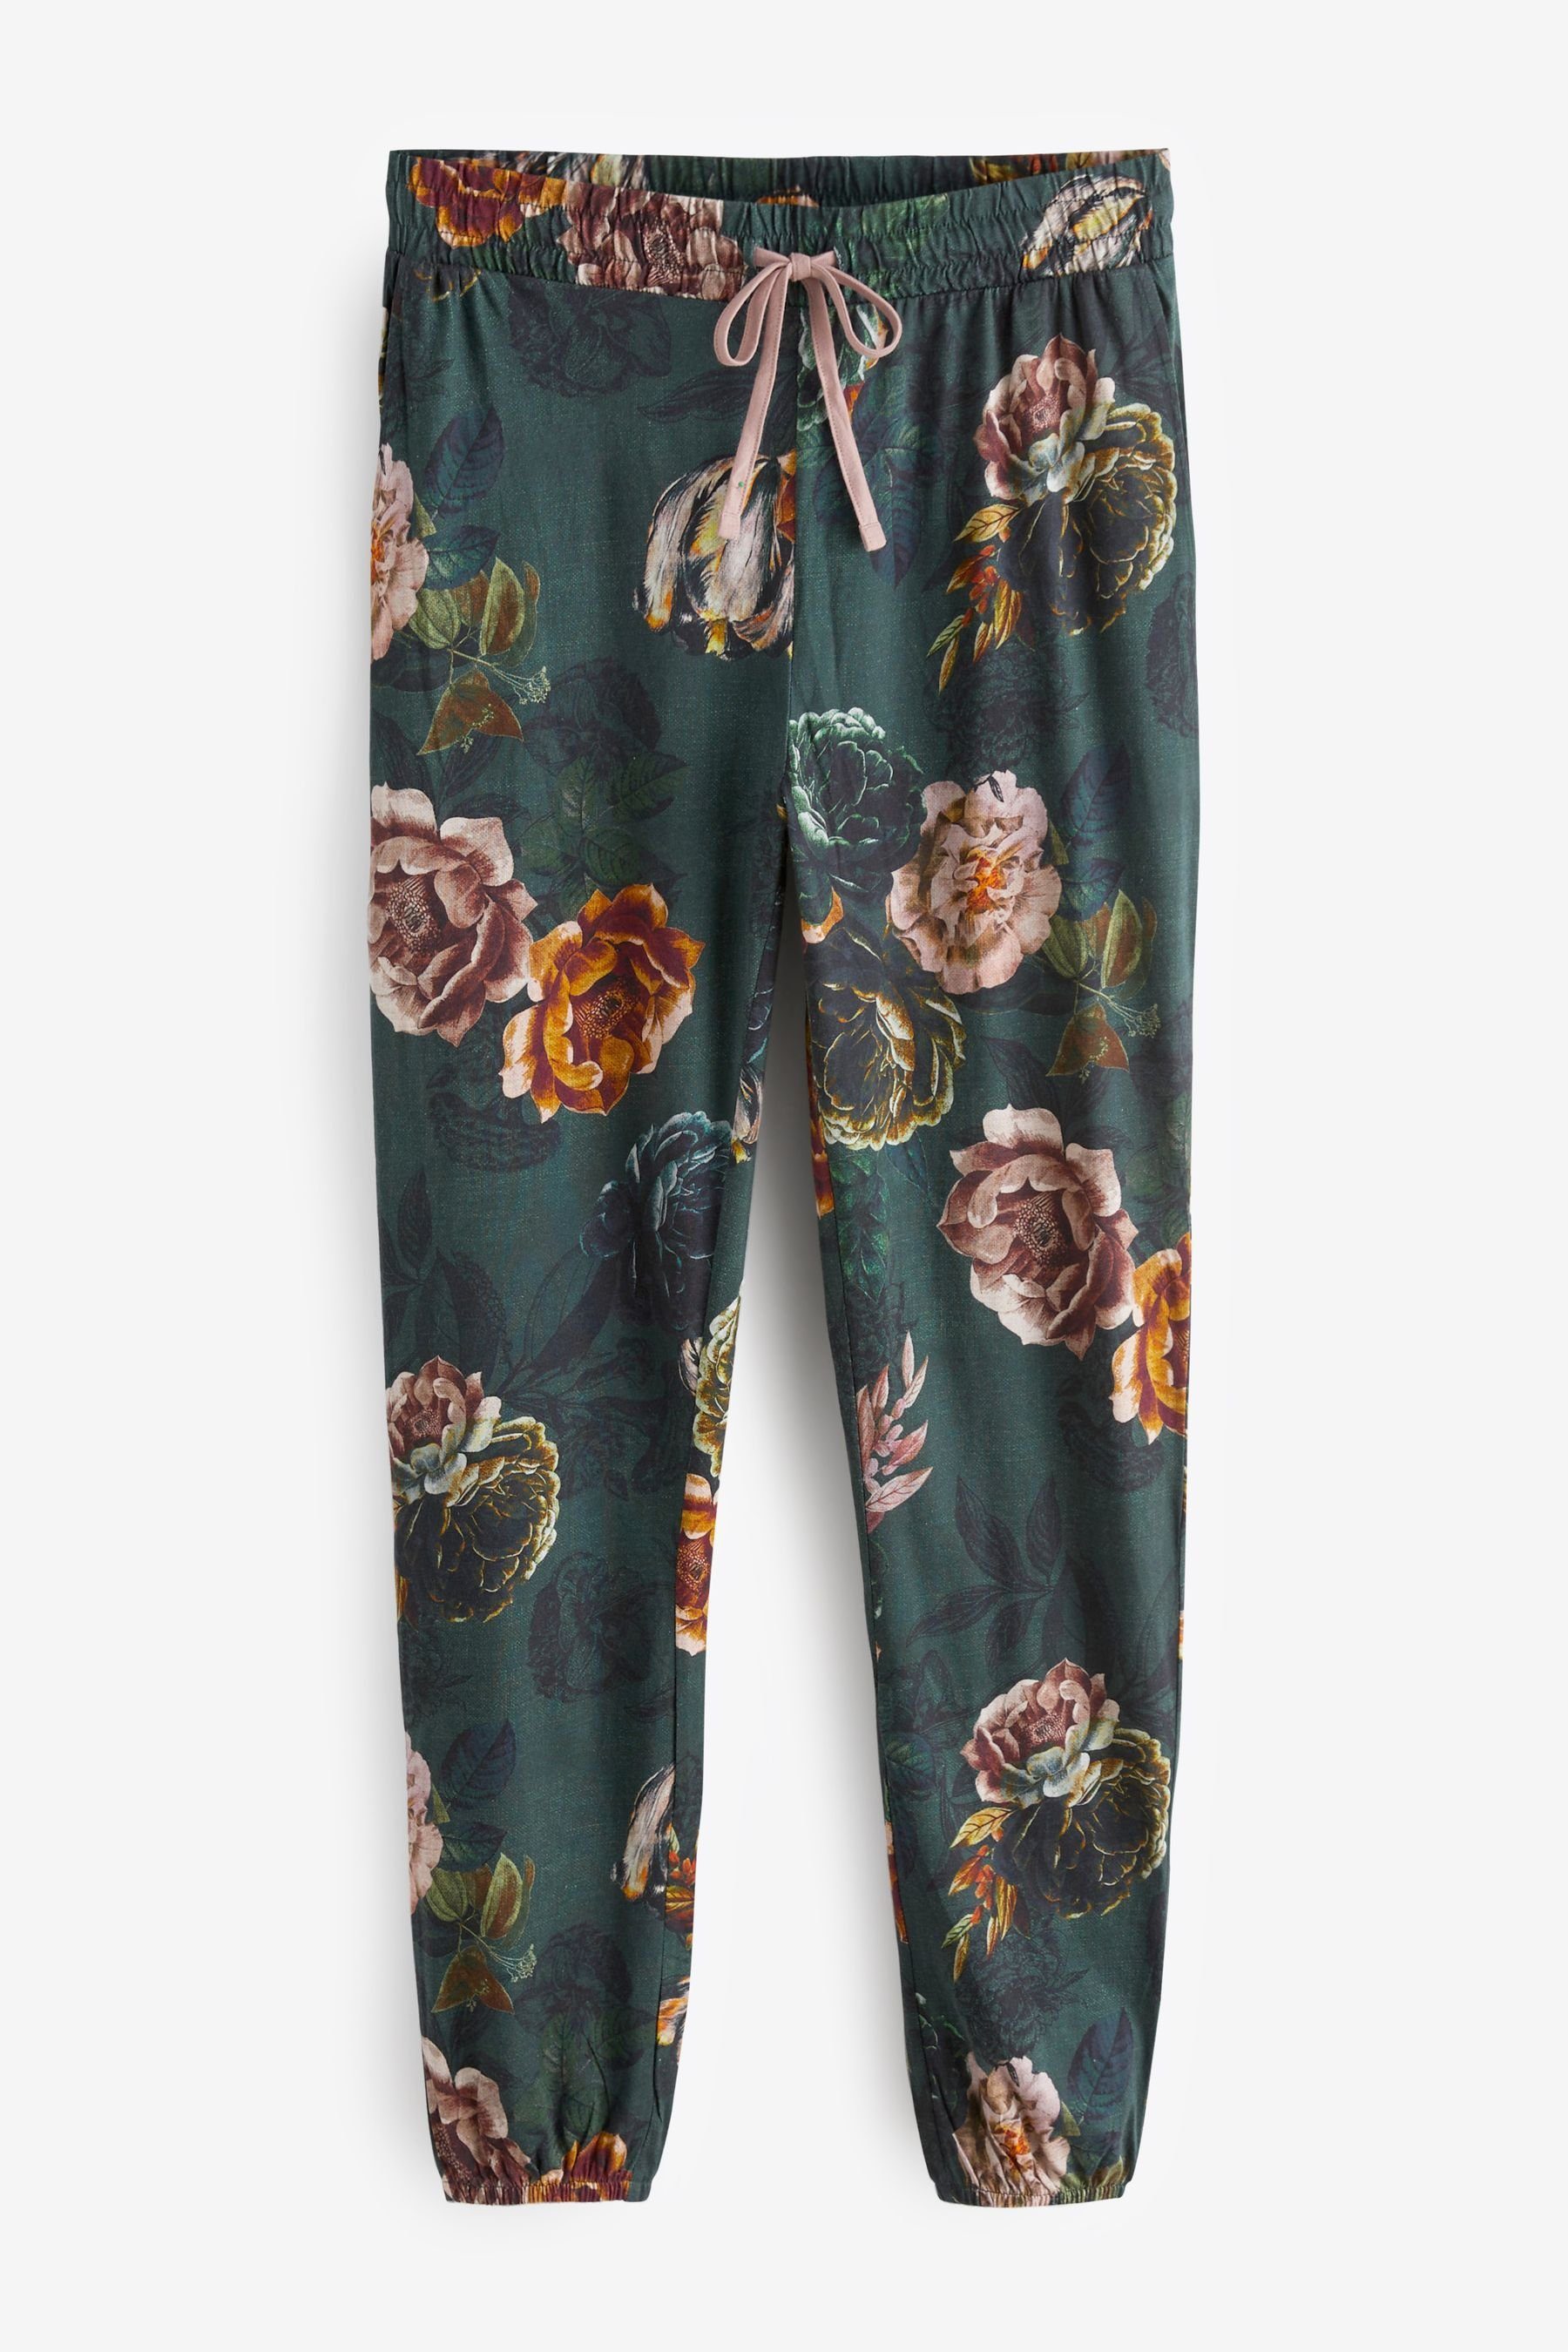 Next Pyjama Floral tlg) (2 aus Pyjama Baumwolle Pink/Green